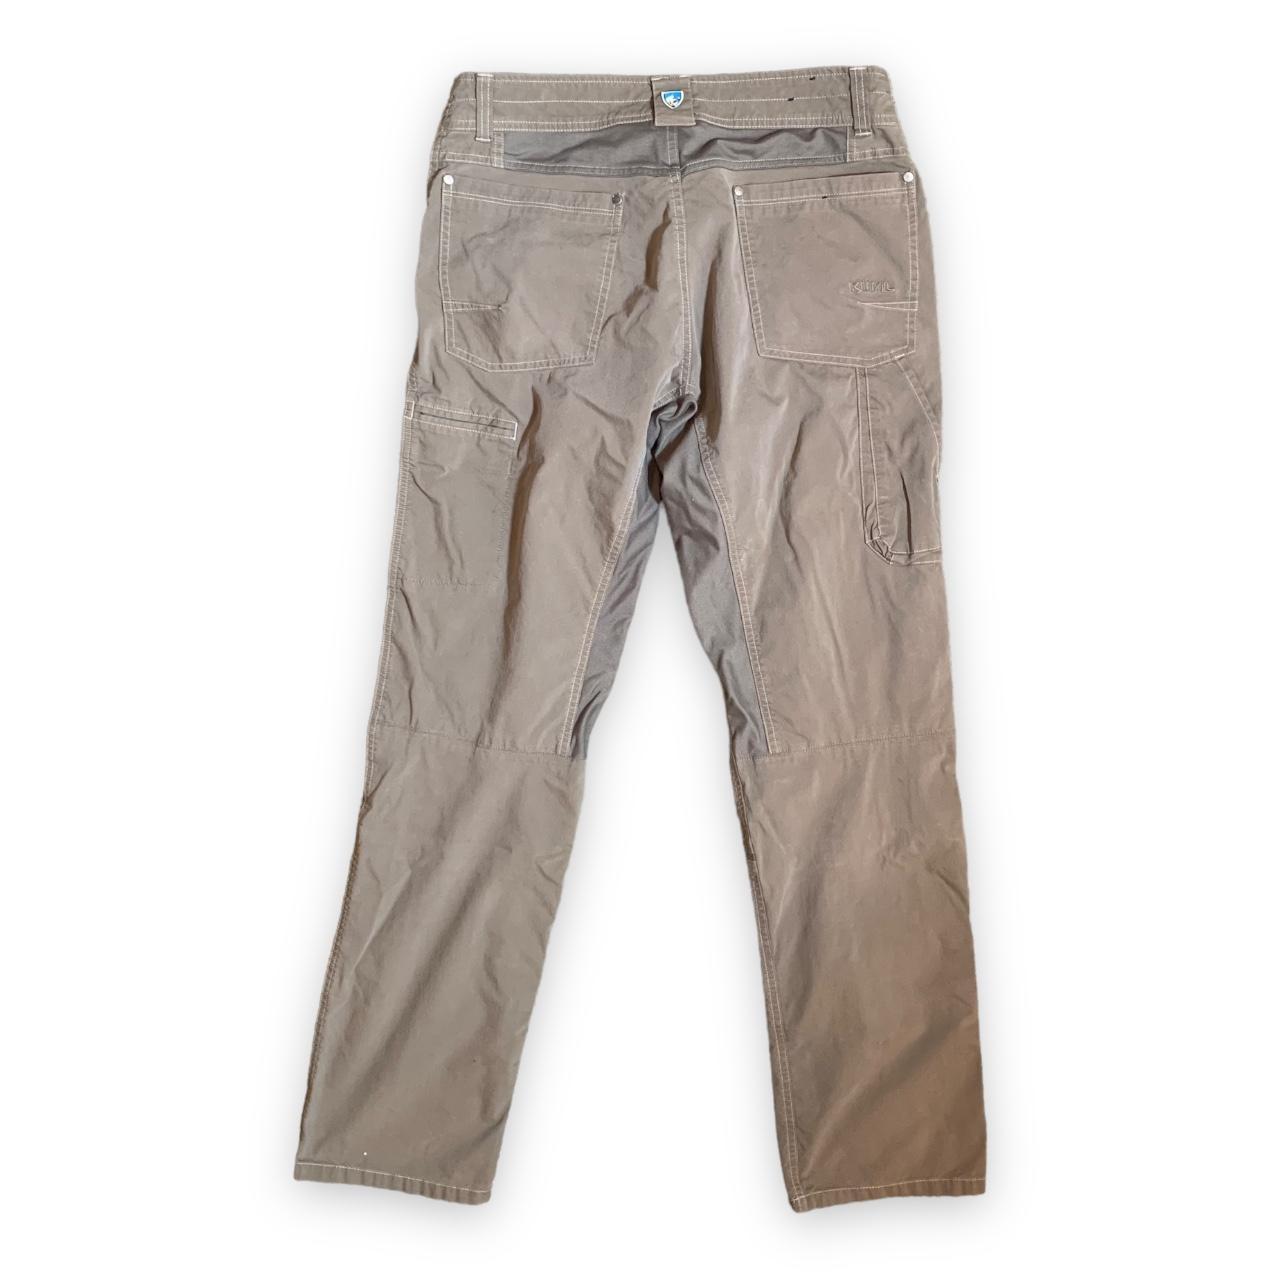 KÜHL Men's Brown Trousers (3)